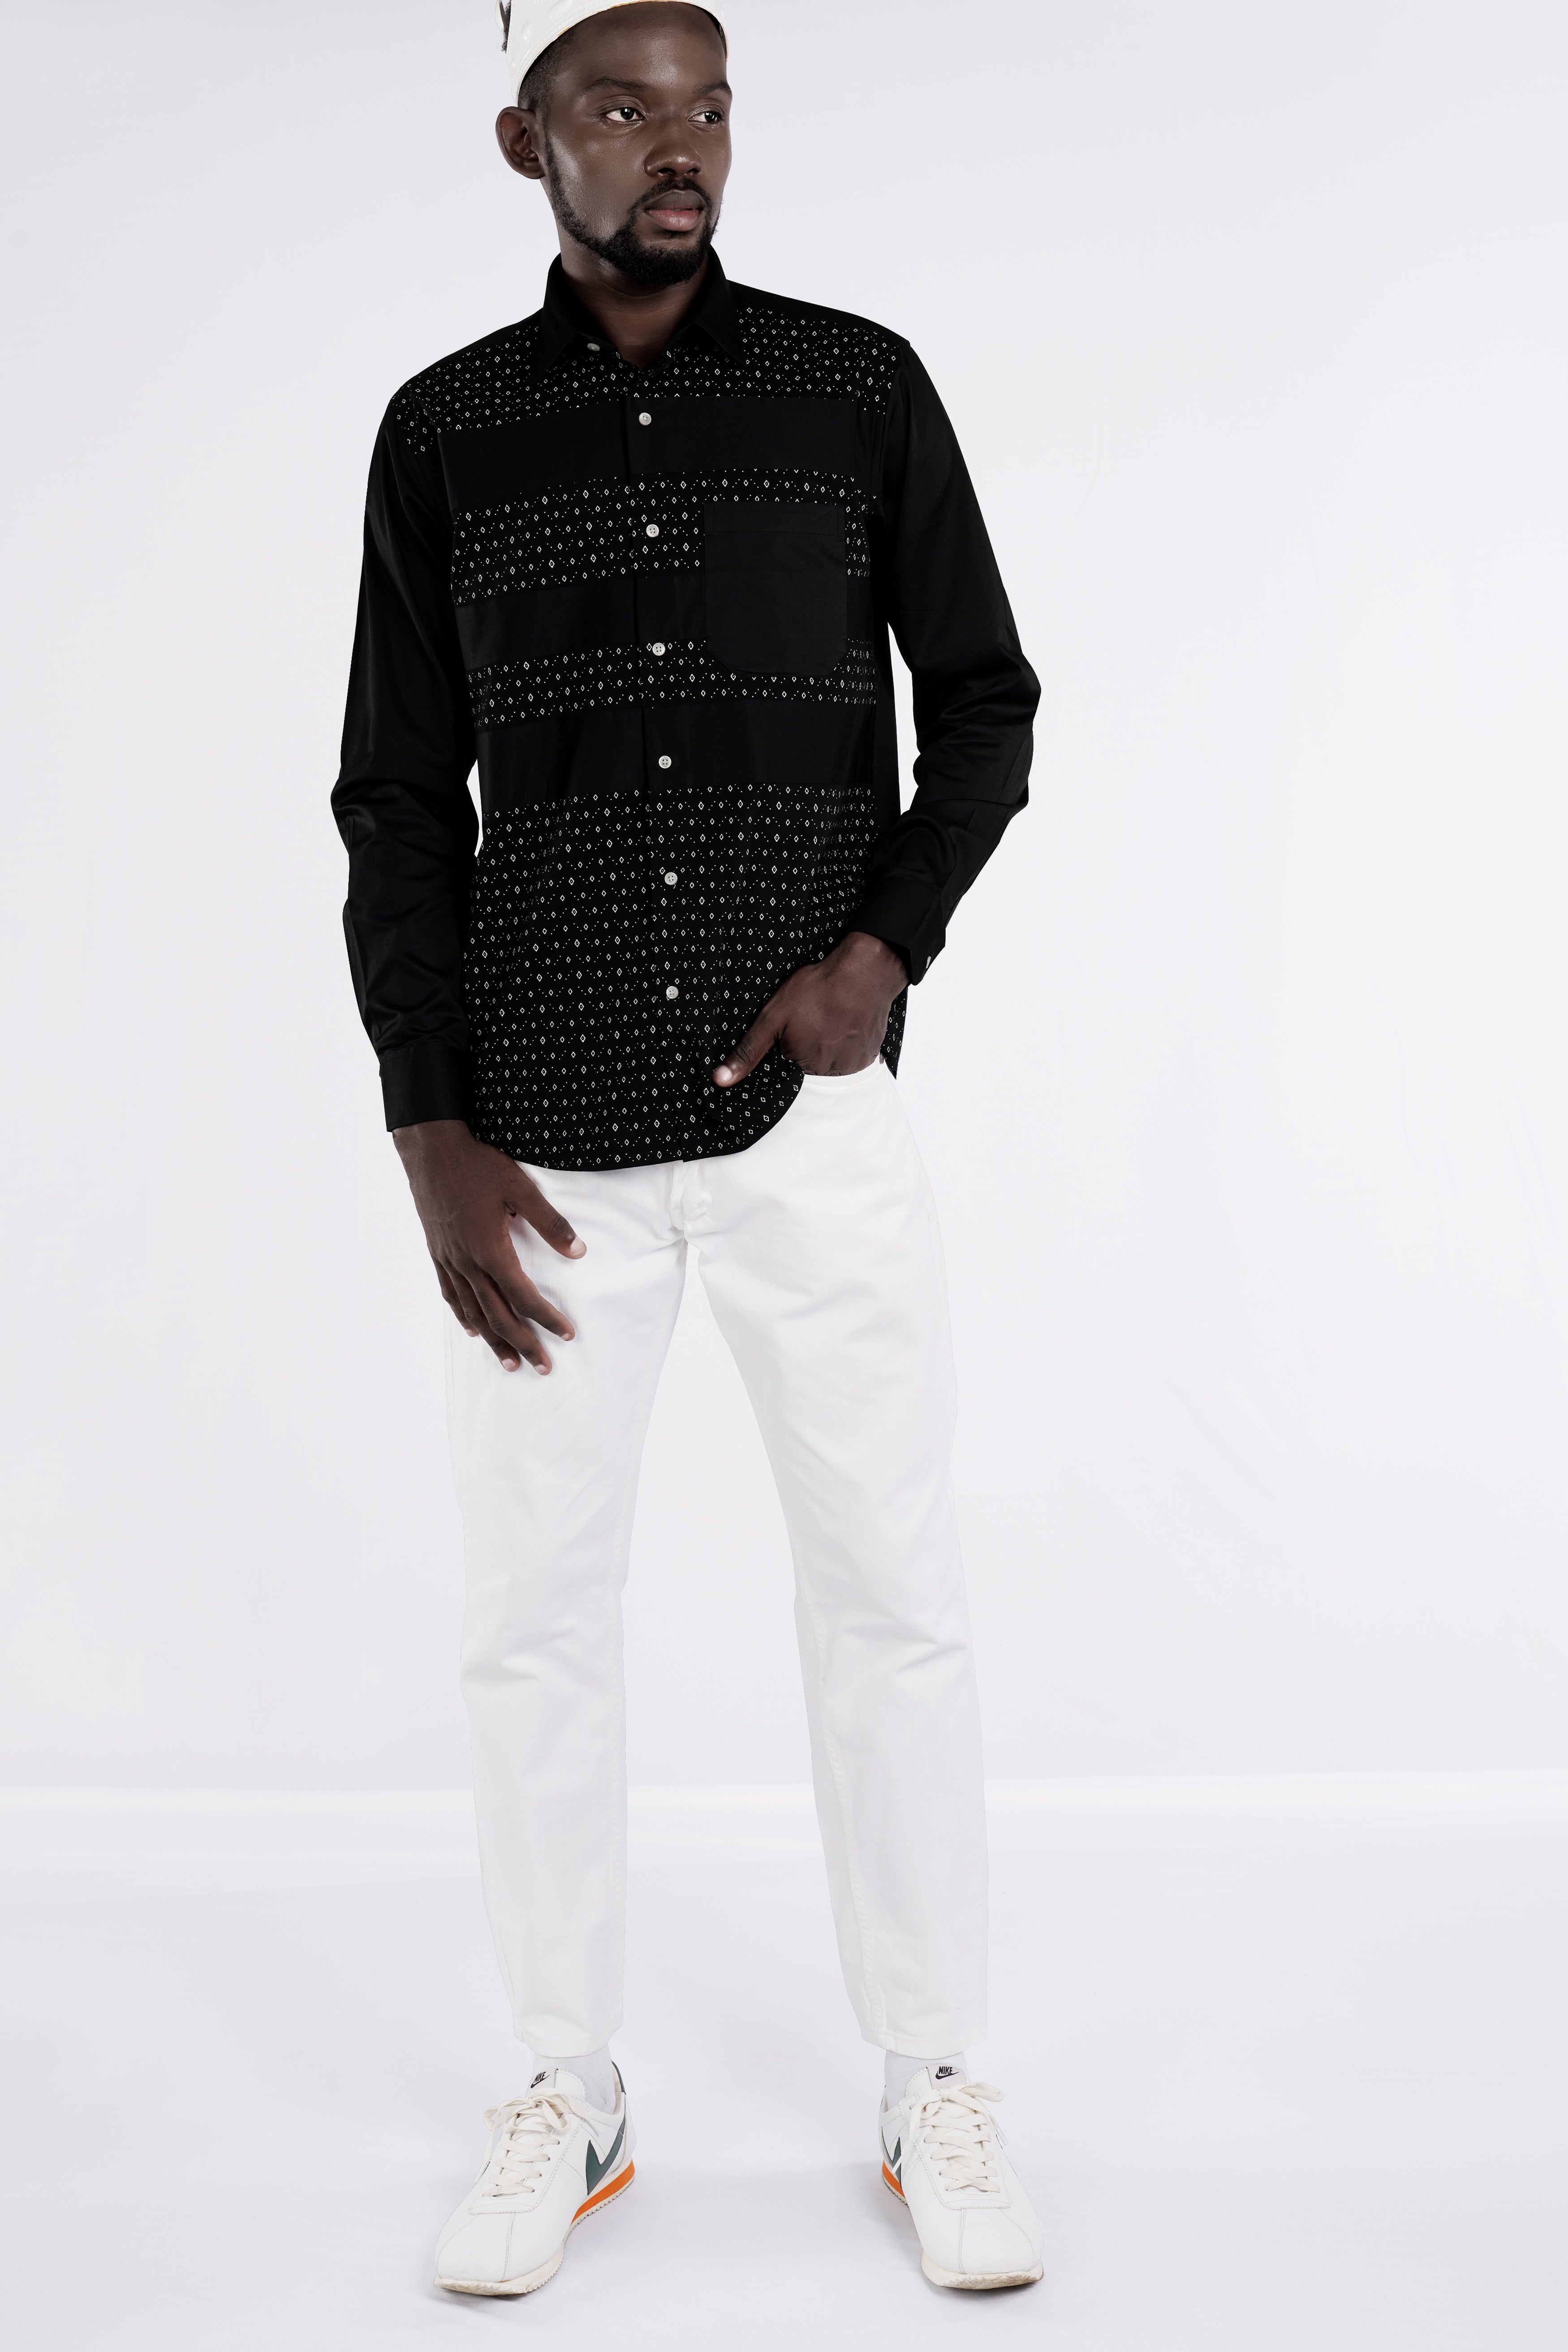 Jade Black and White Printed Super Soft Premium Cotton Designer Shirt